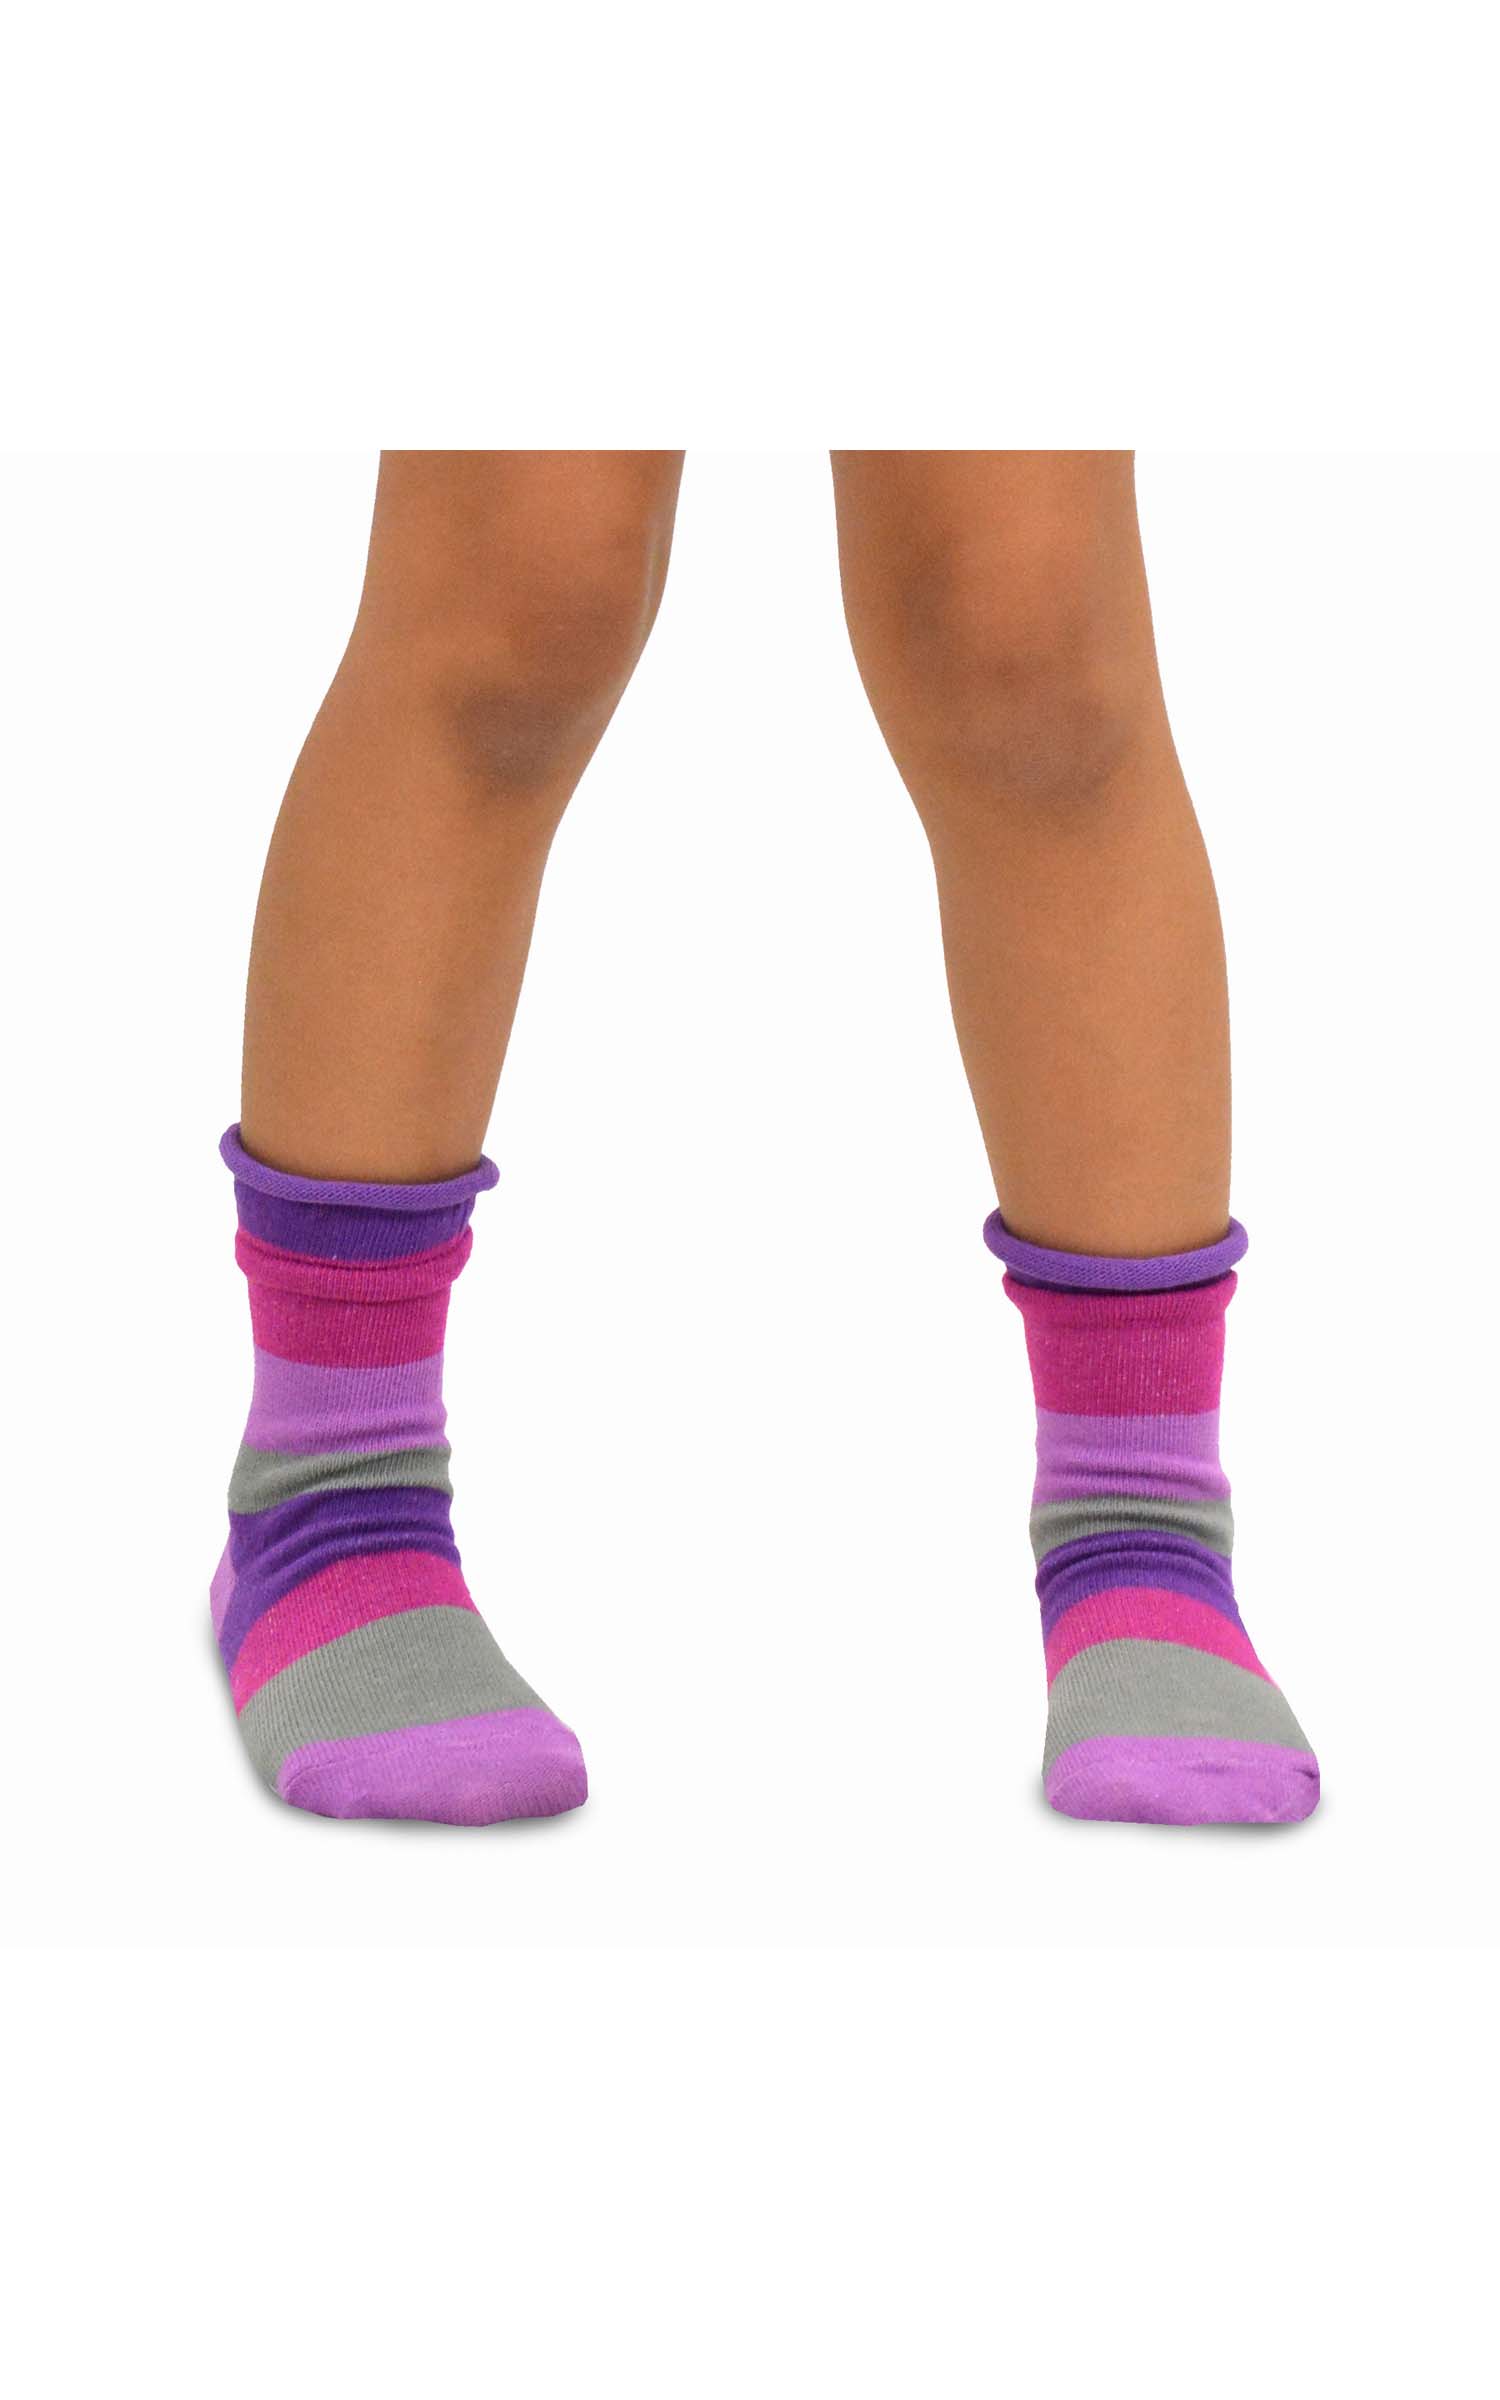 TeeHee Little Kids Girls Cotton Crew Basic Roll Top Socks 6 Pair Pack (9-10 Years, Indian Stripe) - image 3 of 7